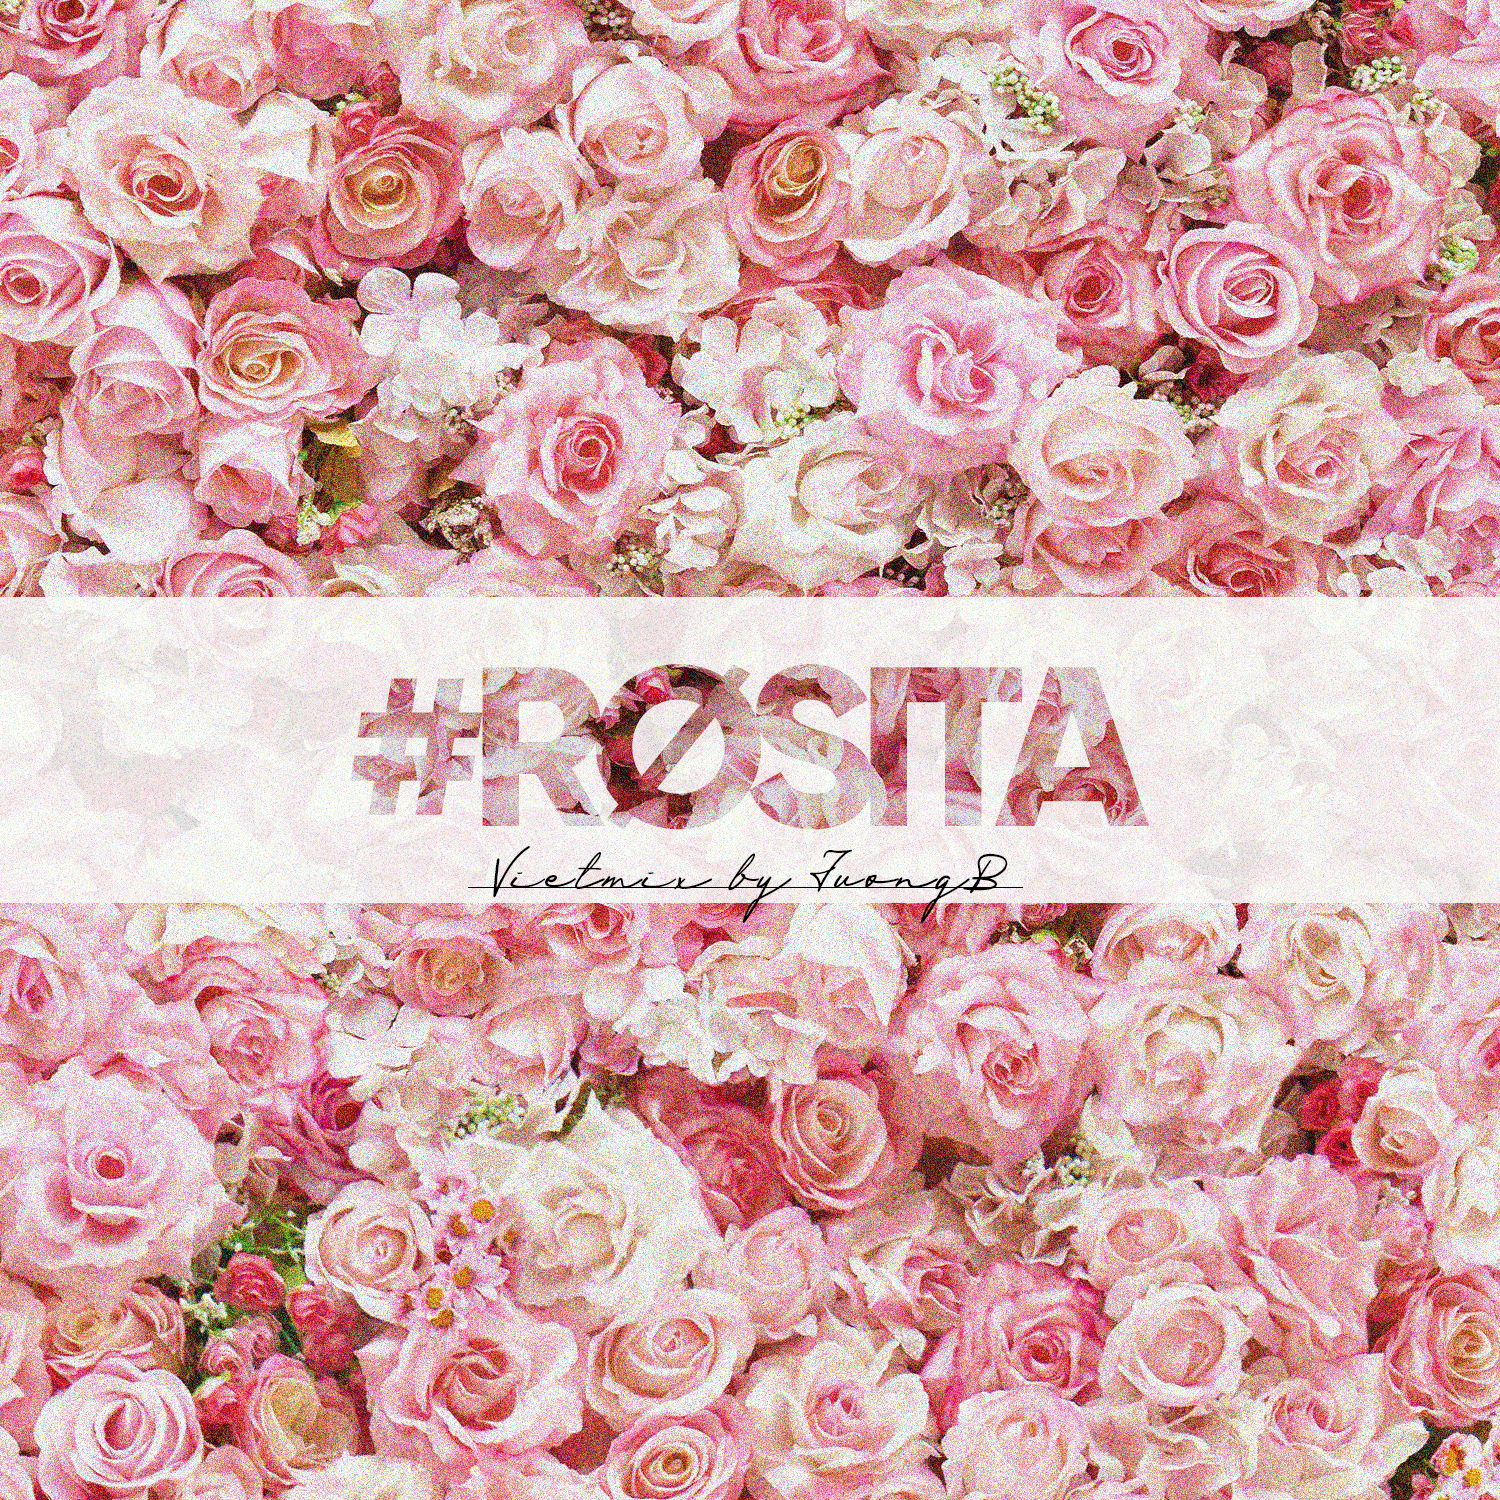 Skinuti #Rosita - Vietmix By JuongB